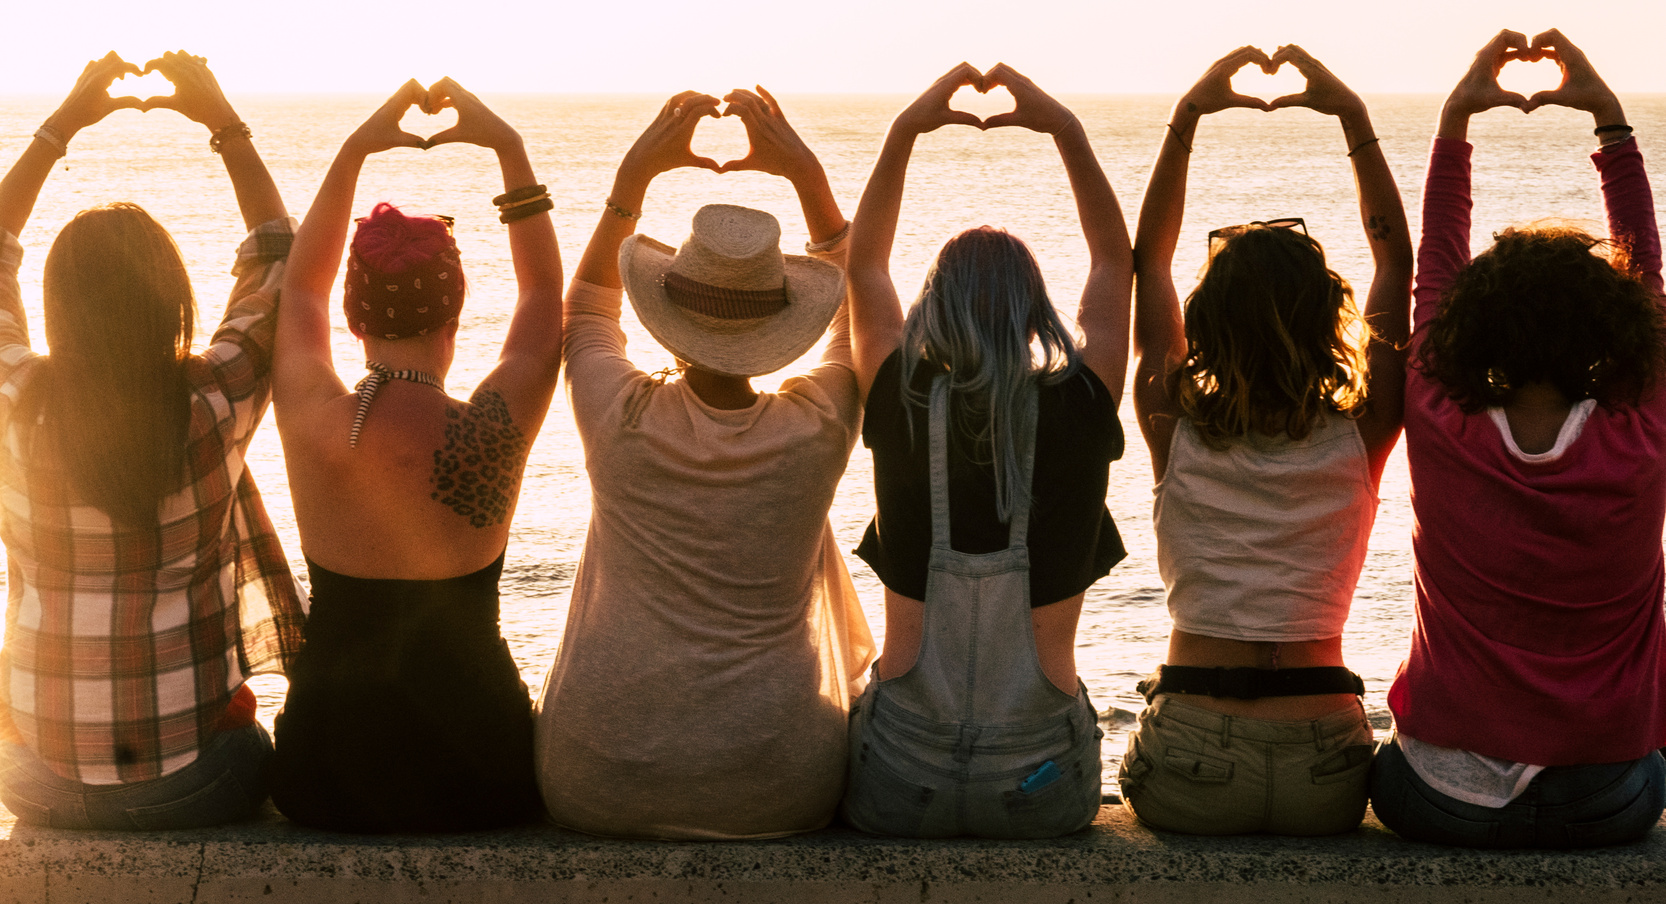 Group of Women Doing Heart Shape in Hands over Sunset